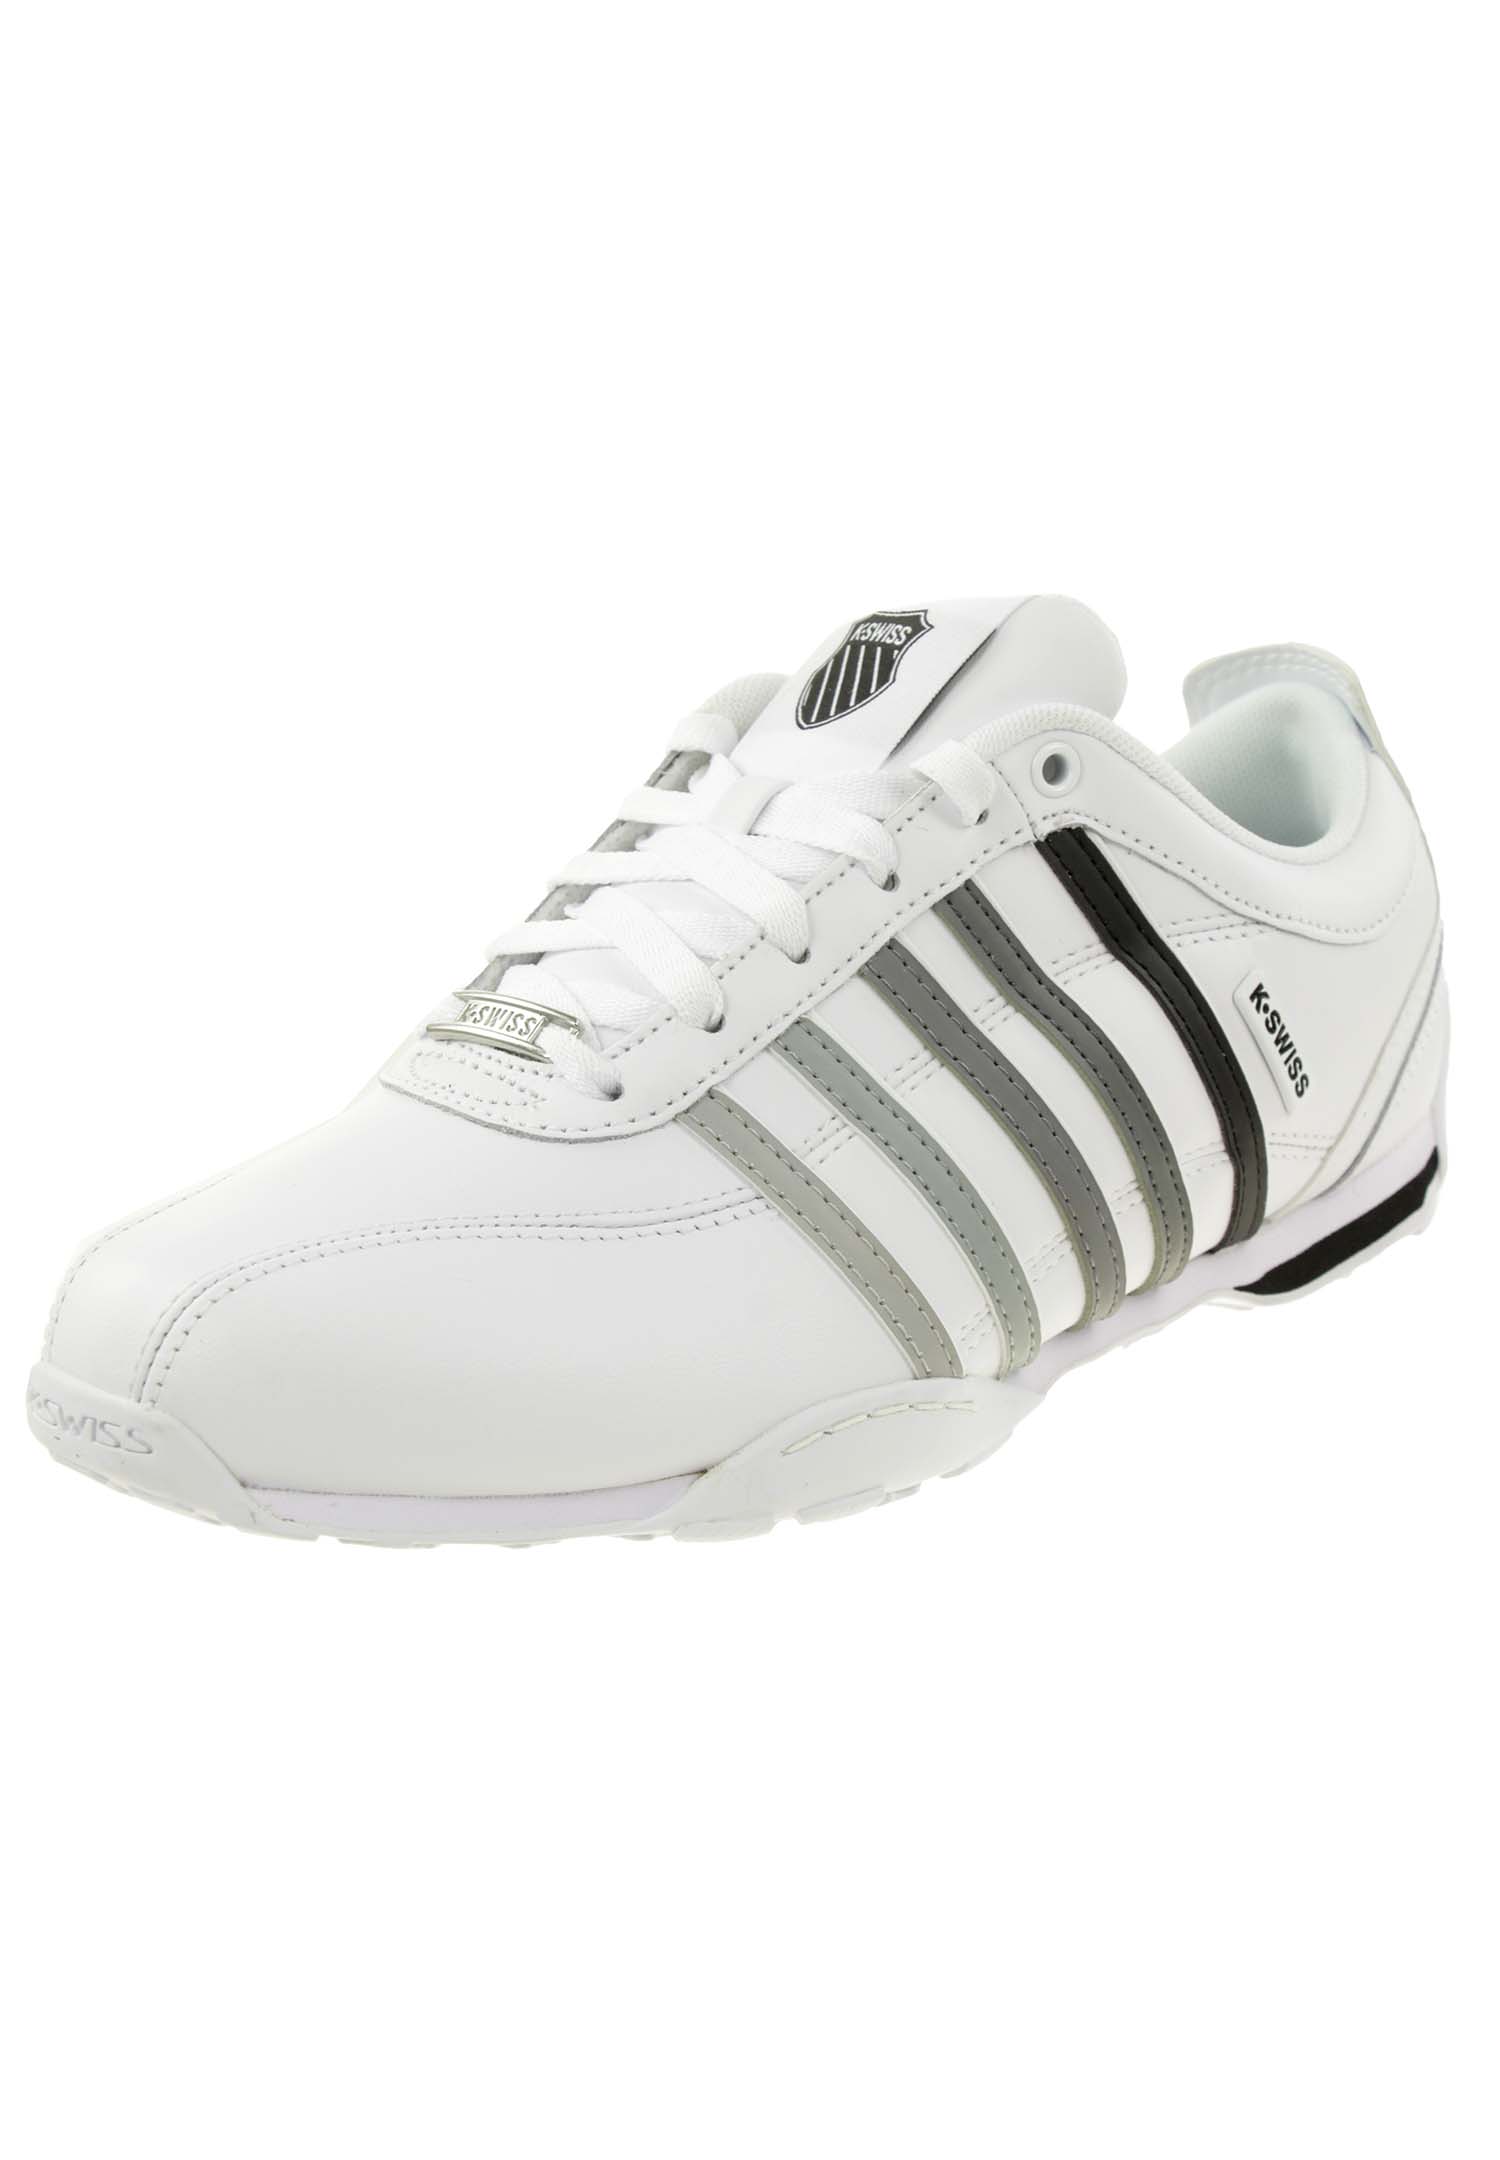 K-SWISS Arvee 1.5 Herren Sneaker Sportschuhe 02453-135-M Weiß/Schwarz/grau